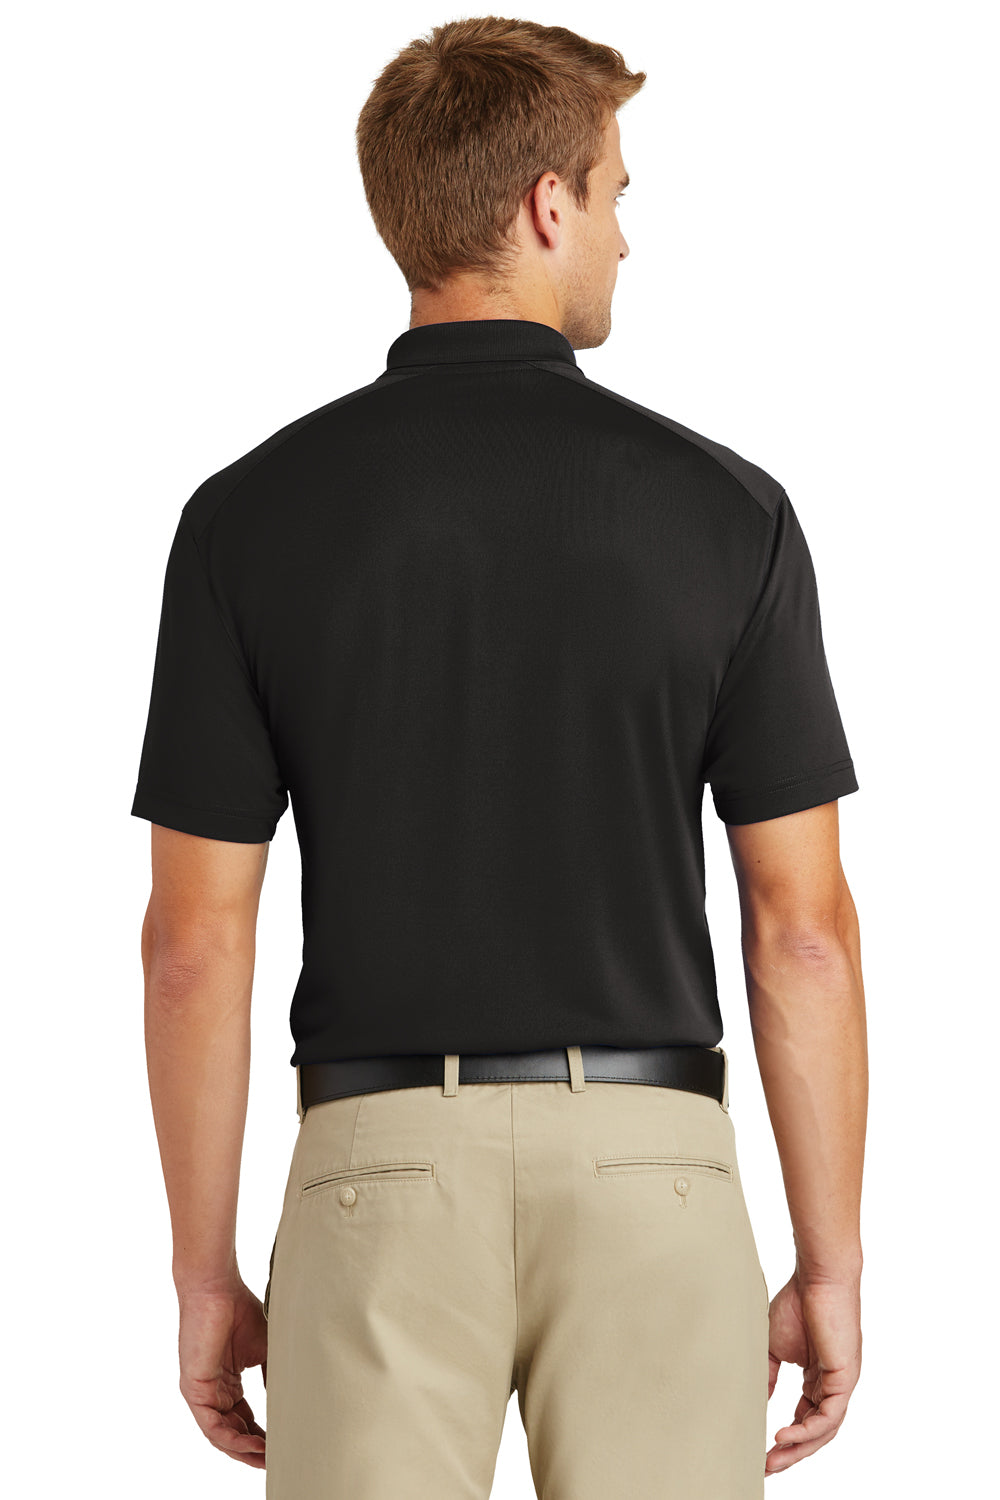 CornerStone CS418 Mens Select Moisture Wicking Short Sleeve Polo Shirt Black Back